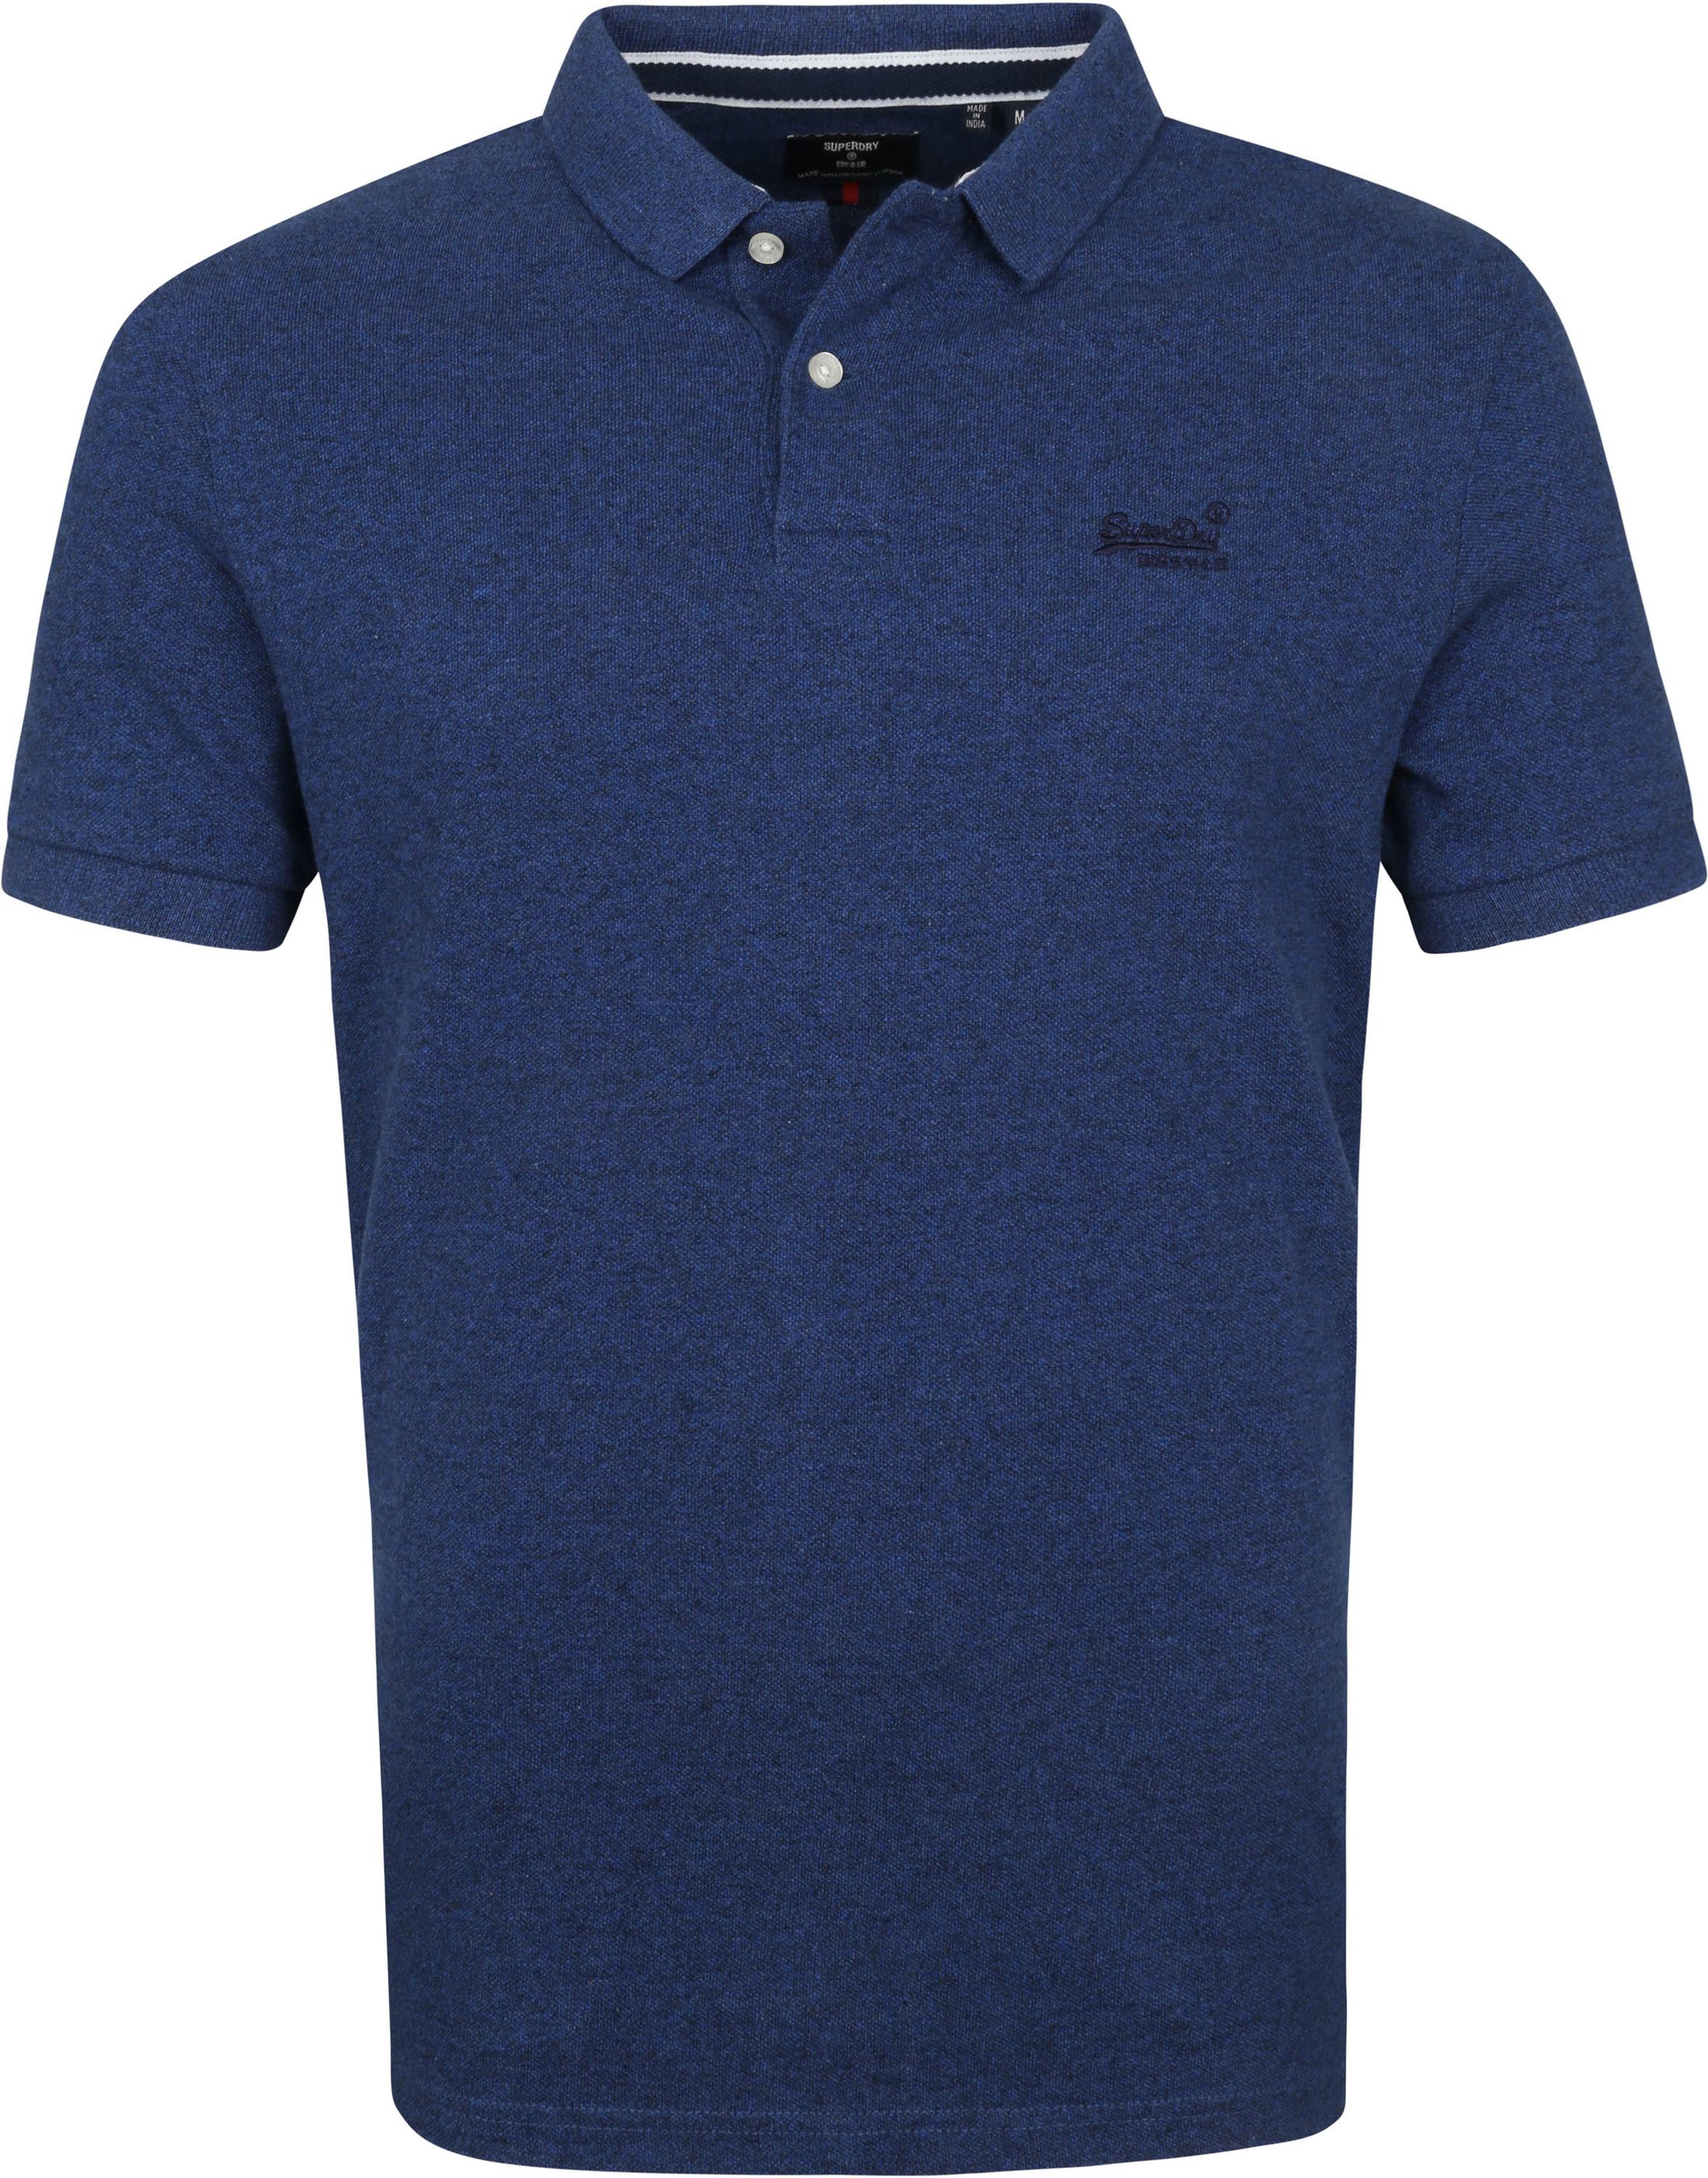 Superdry Classic Polo Shirt Pique Dark Blue Dark Blue size 3XL